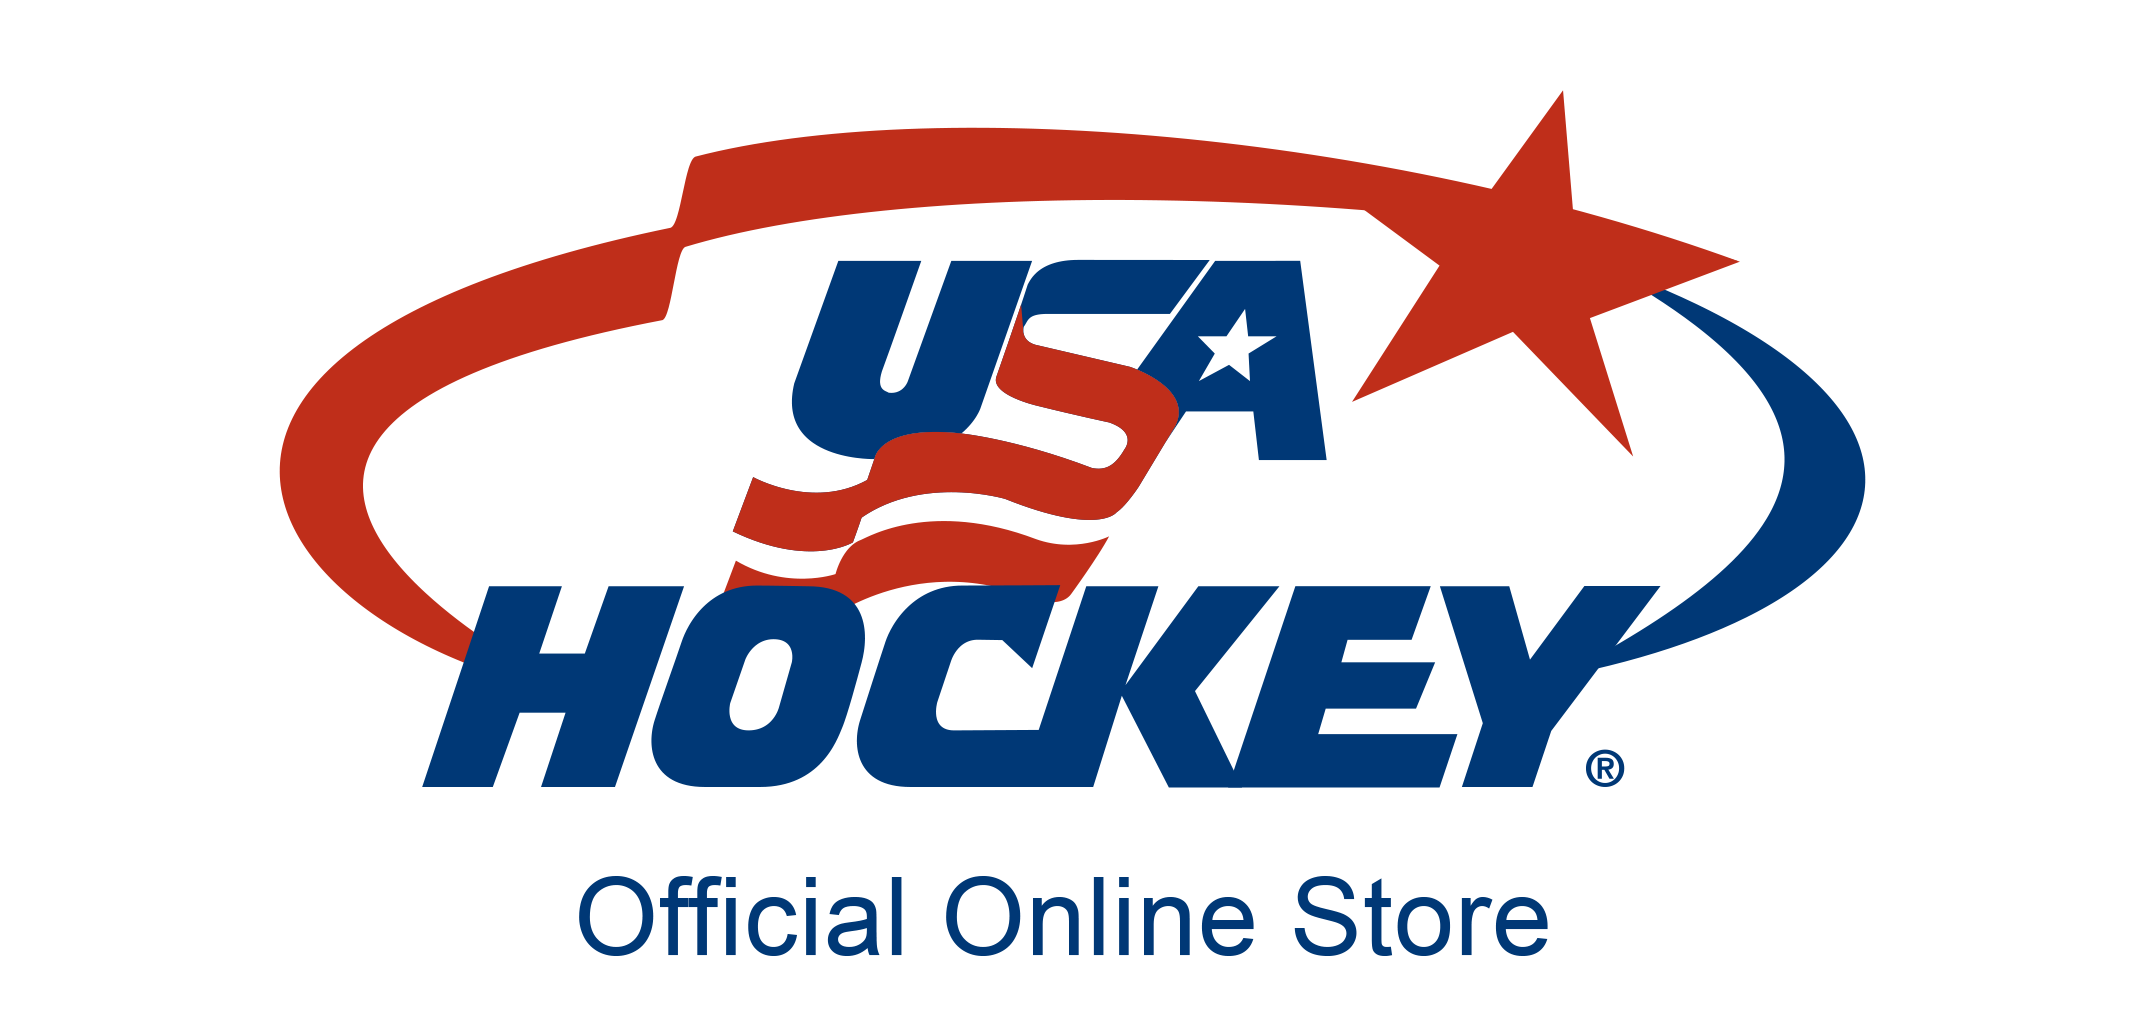 USA Hockey Shop logo